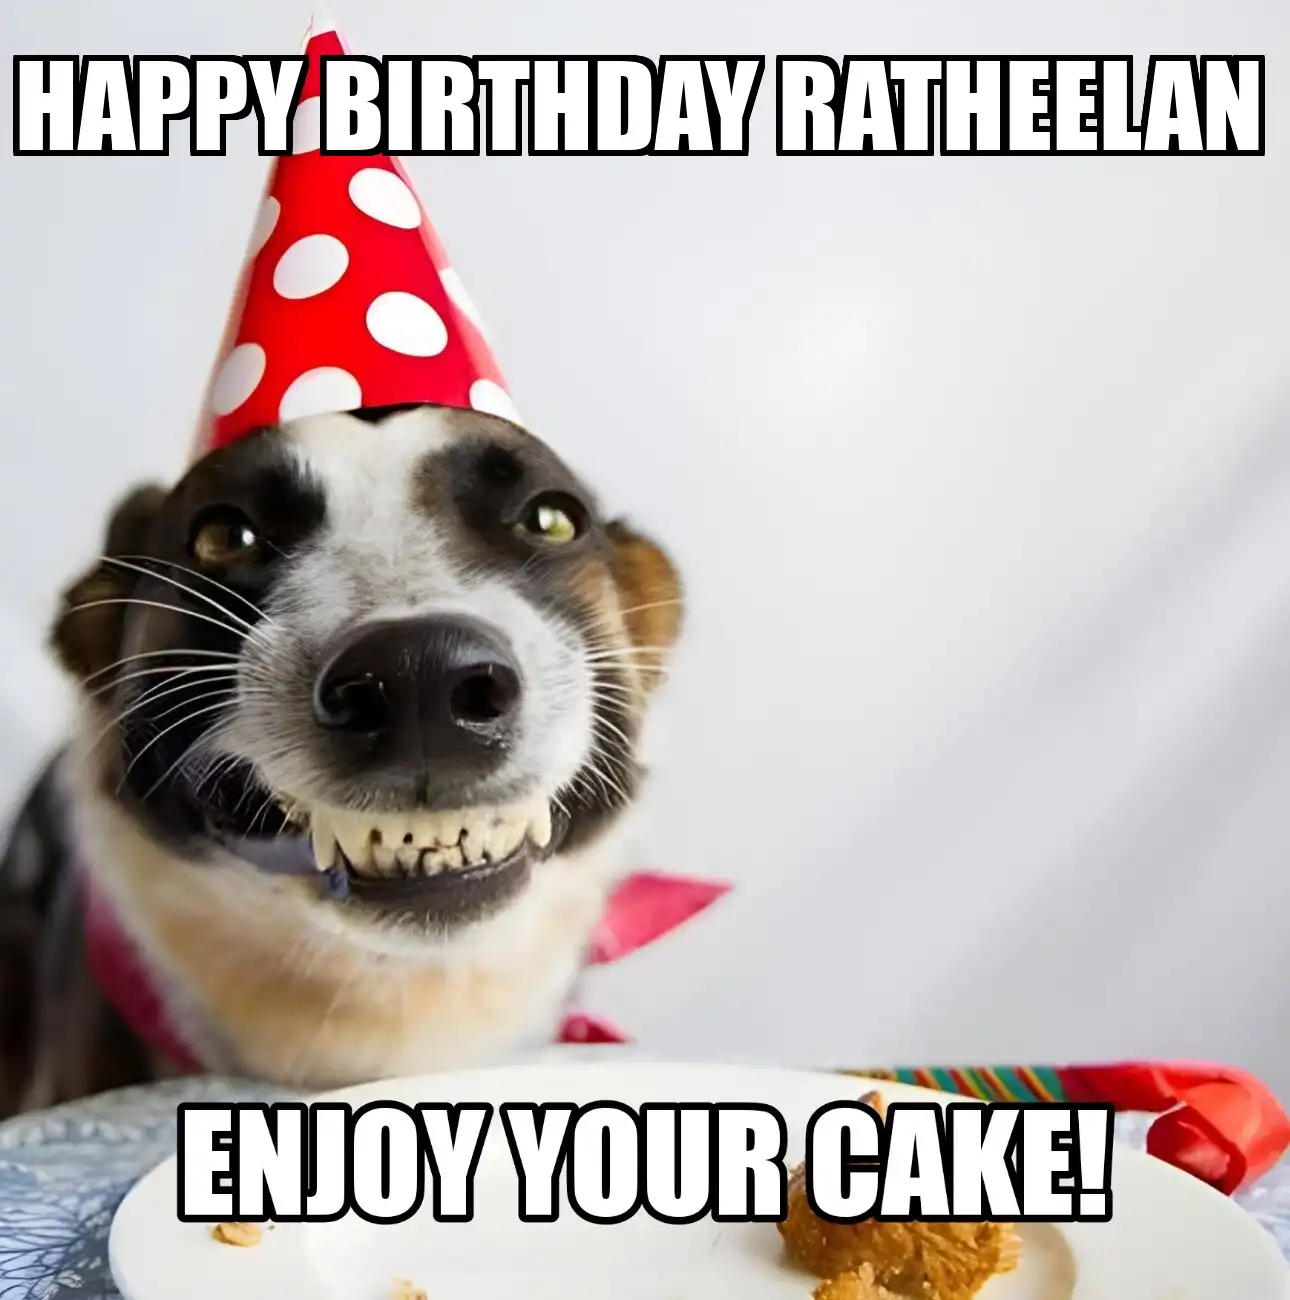 Happy Birthday Ratheelan Enjoy Your Cake Dog Meme